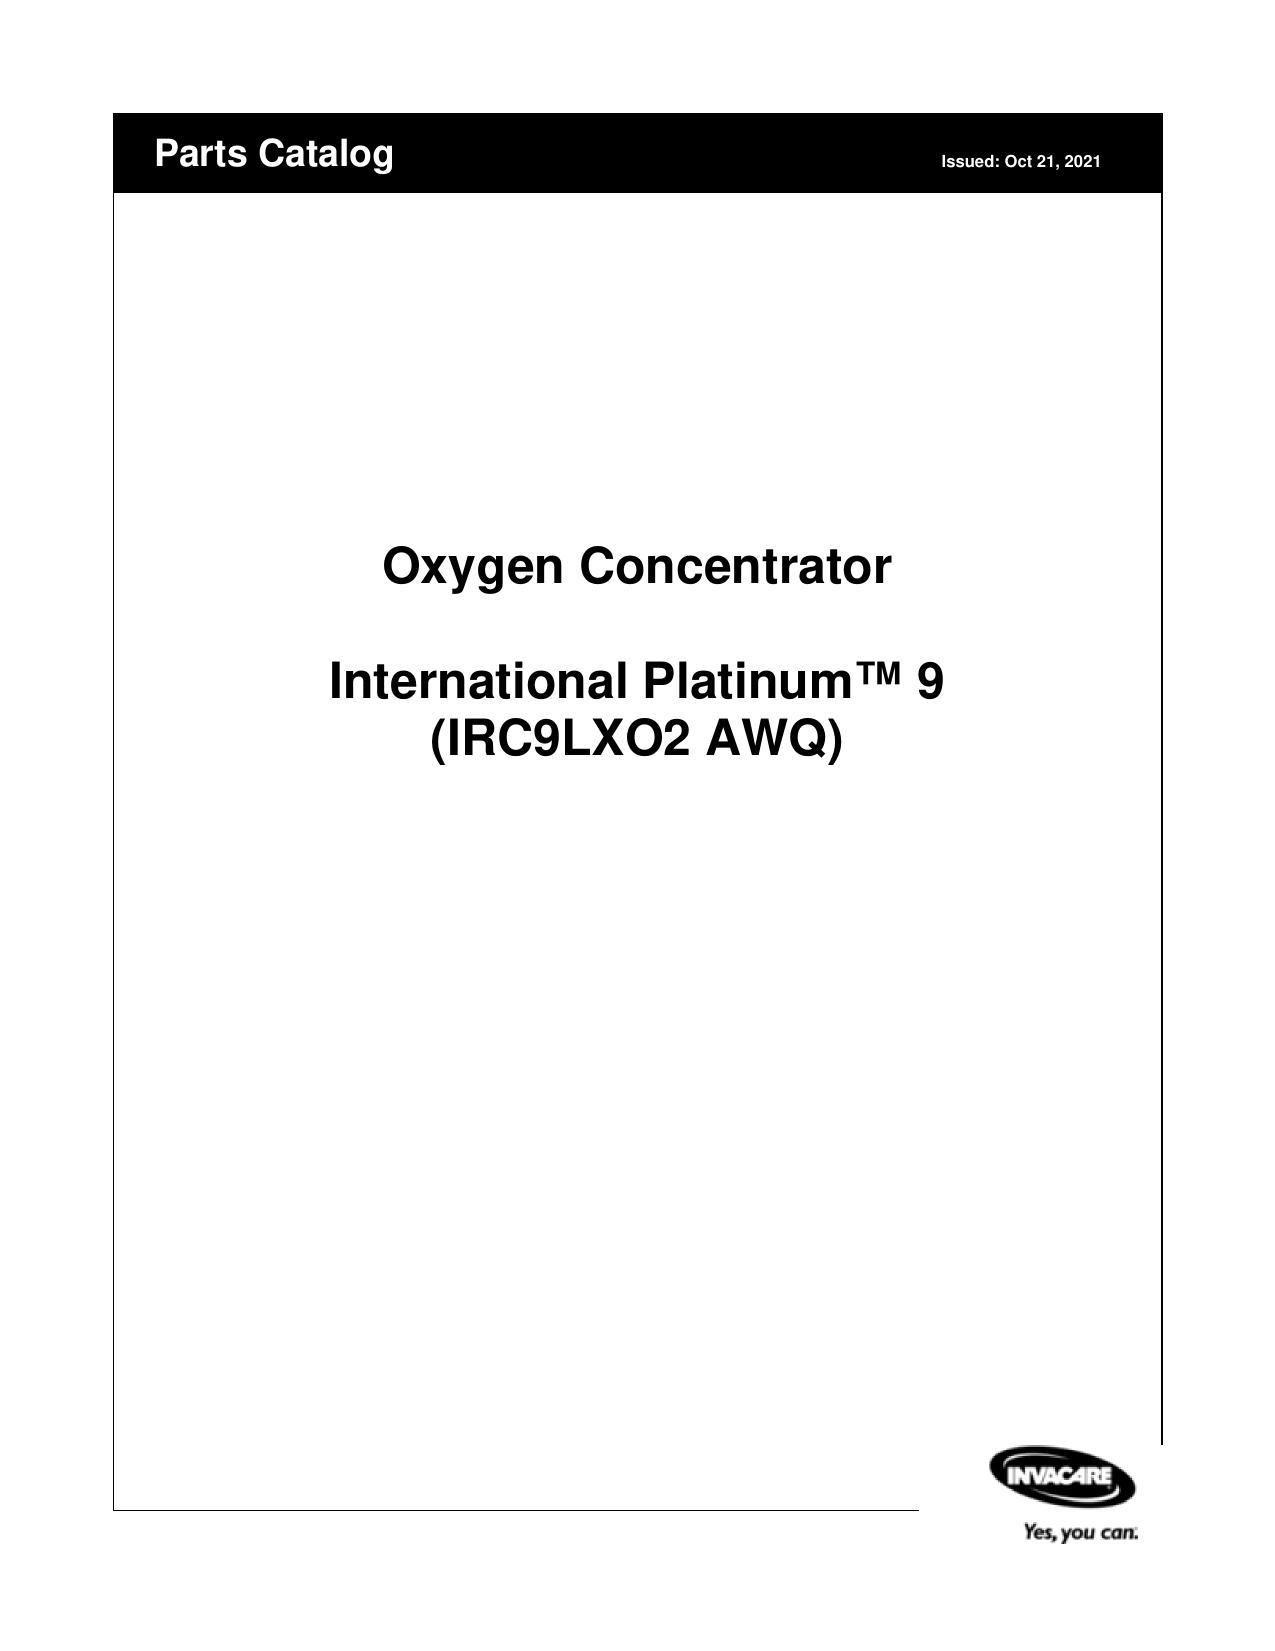 parts-catalog-for-invacare-international-platinumtm-9-ircilxo2-awq-oxygen-concentrator.pdf